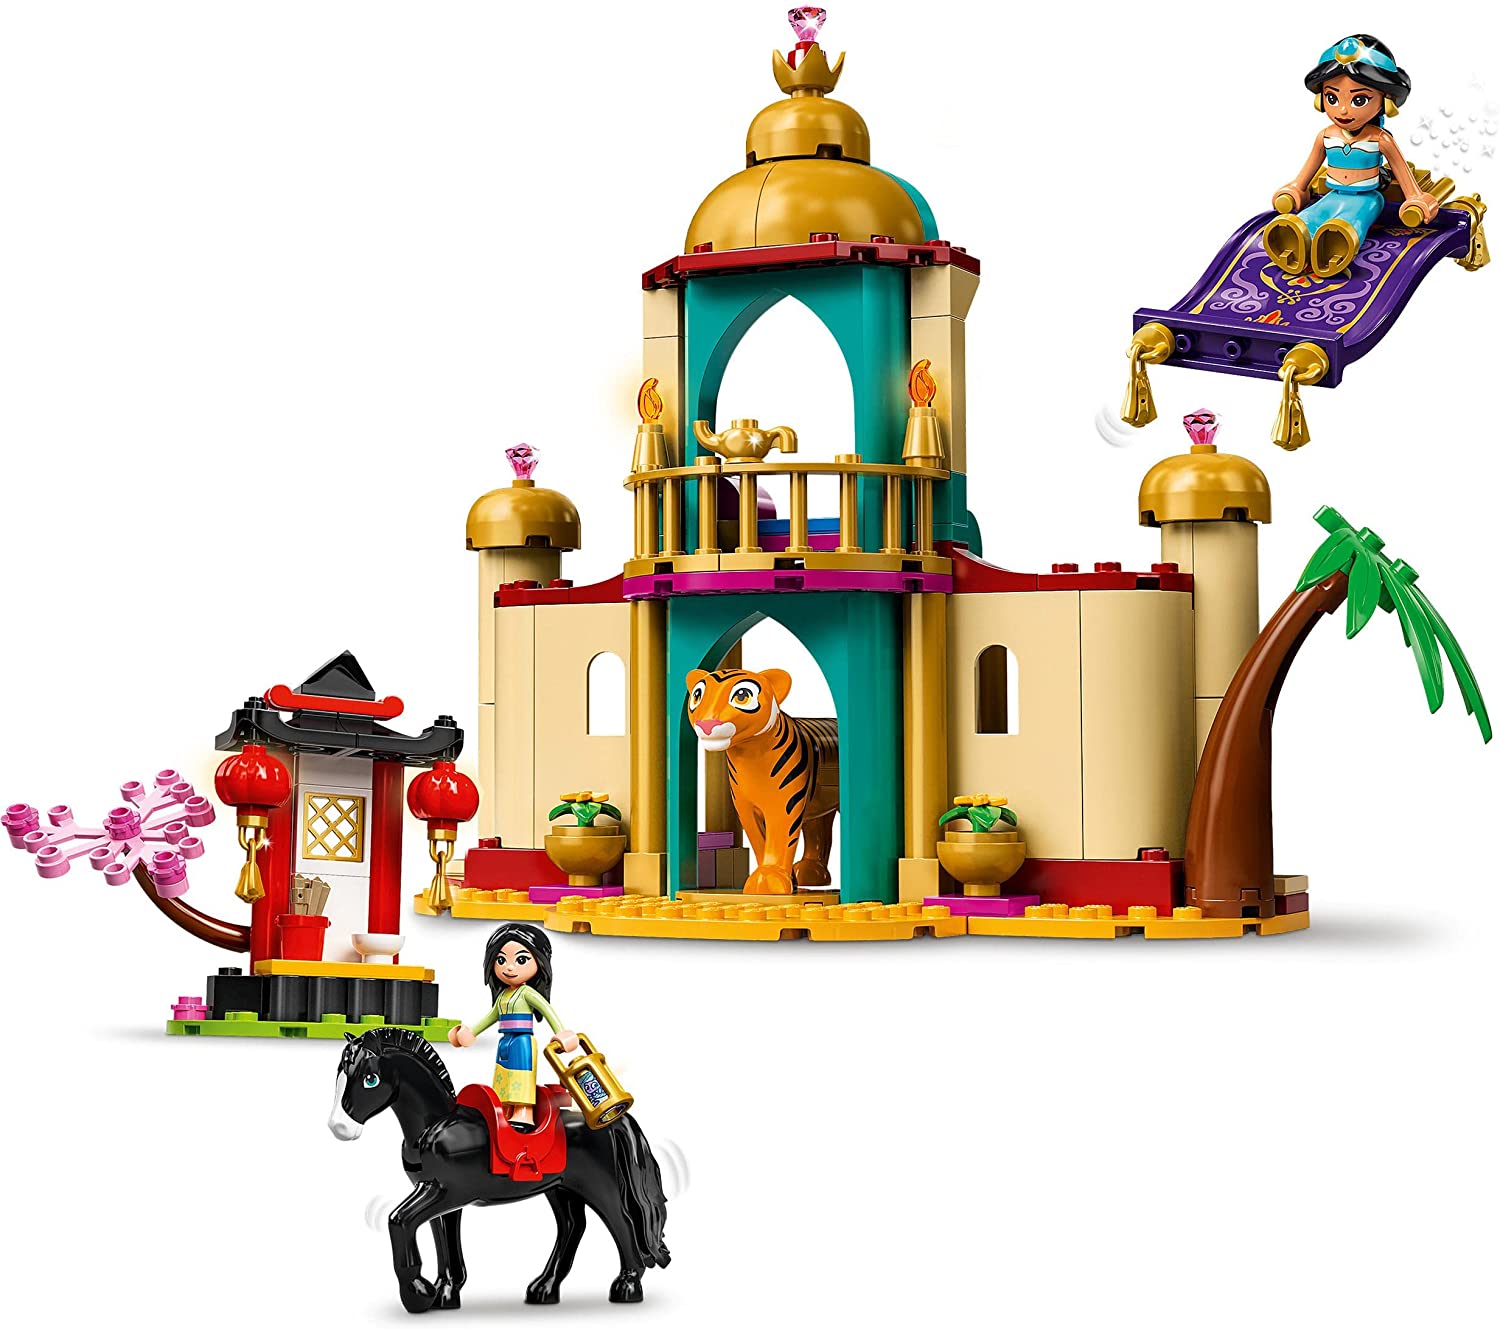 LEGO 43208 Disney Princess Jasmine and Mulan’s Adventure Palace Set